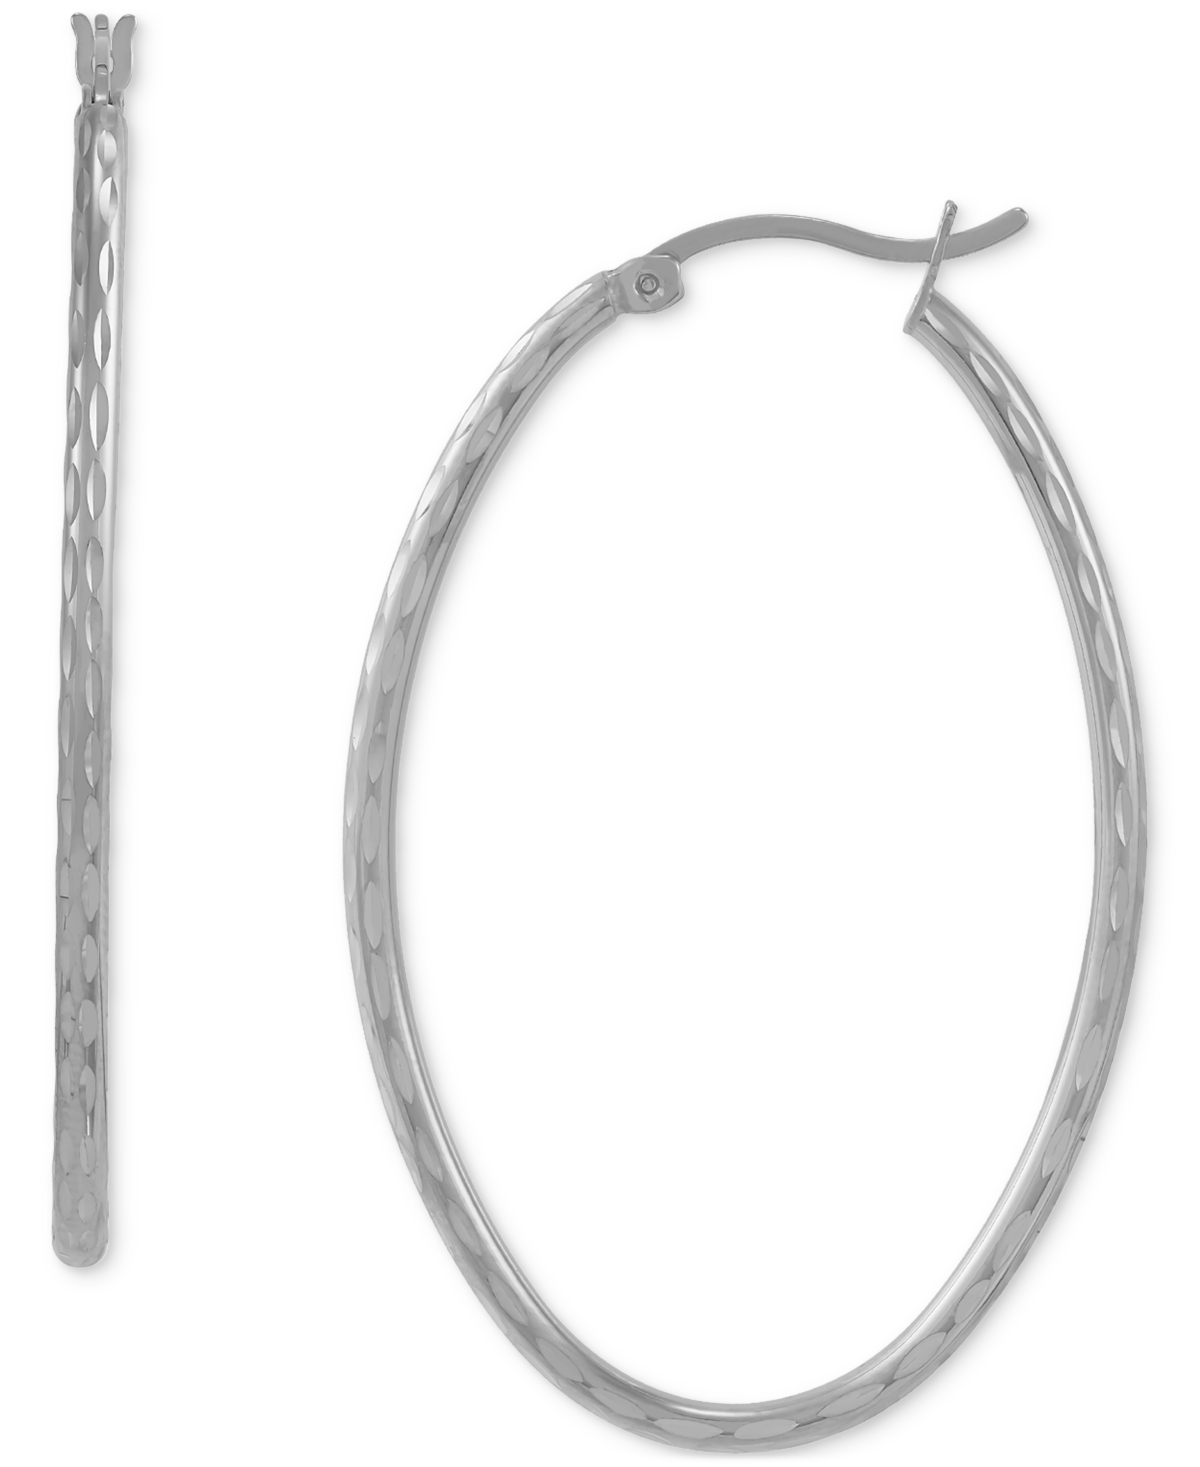 GIANI BERNINI MACY'S Large 25mm Hoop Earrings in Sterling Silver $21.99 -  PicClick